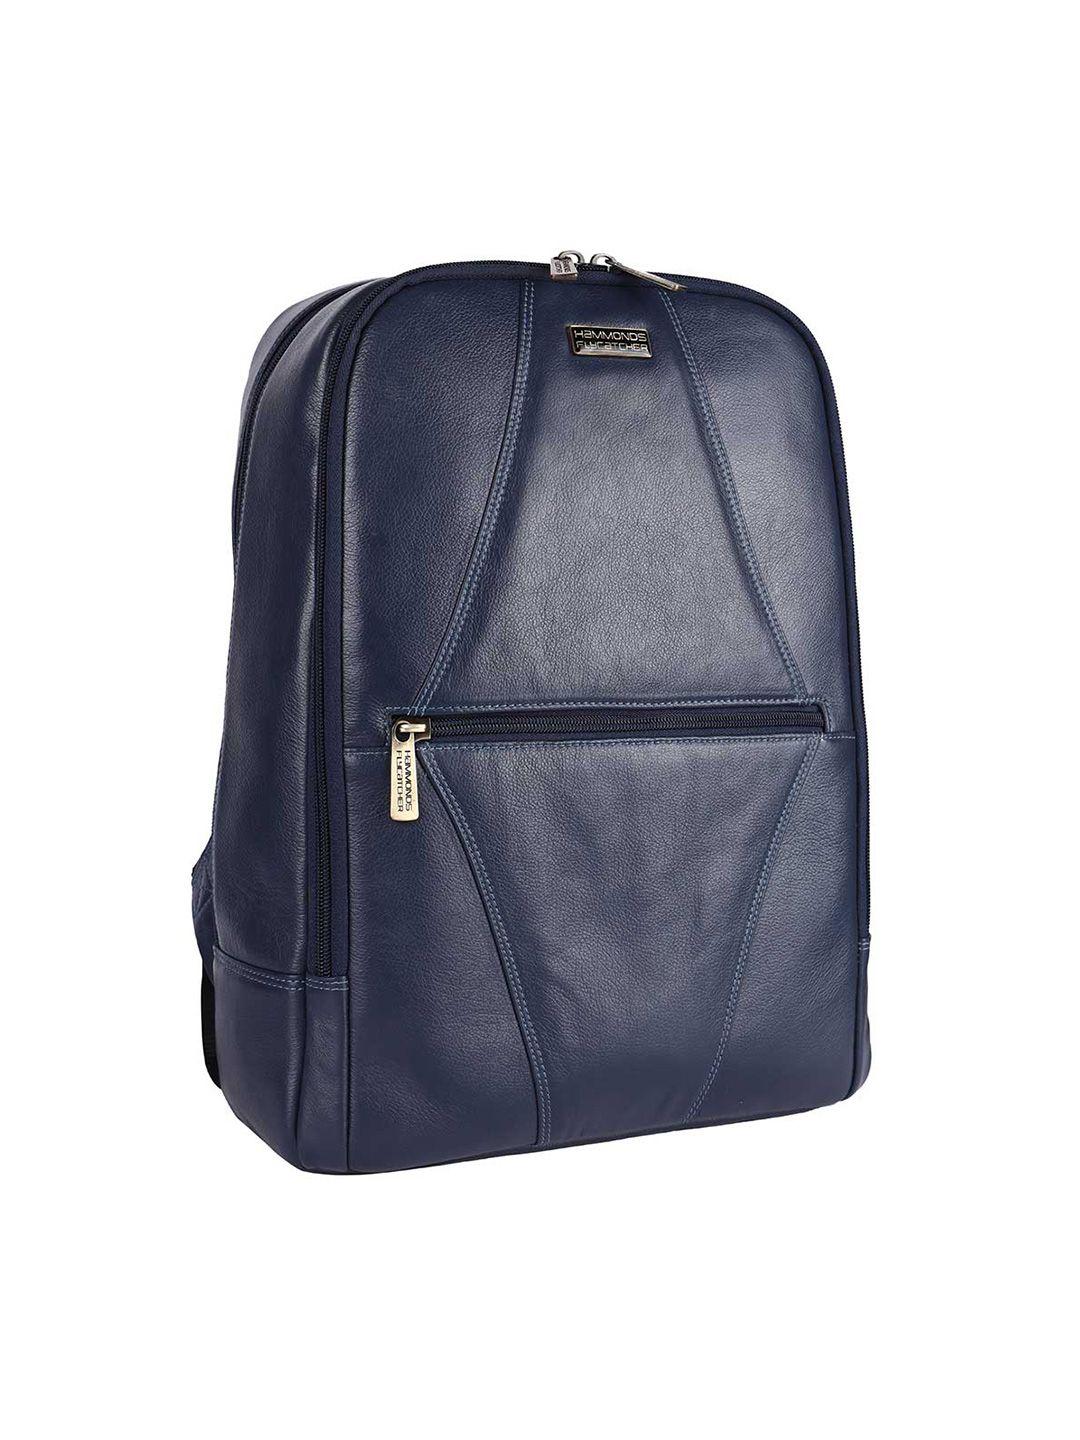 hammonds flycatcher unisex blue leather 15.6 inch laptop backpack